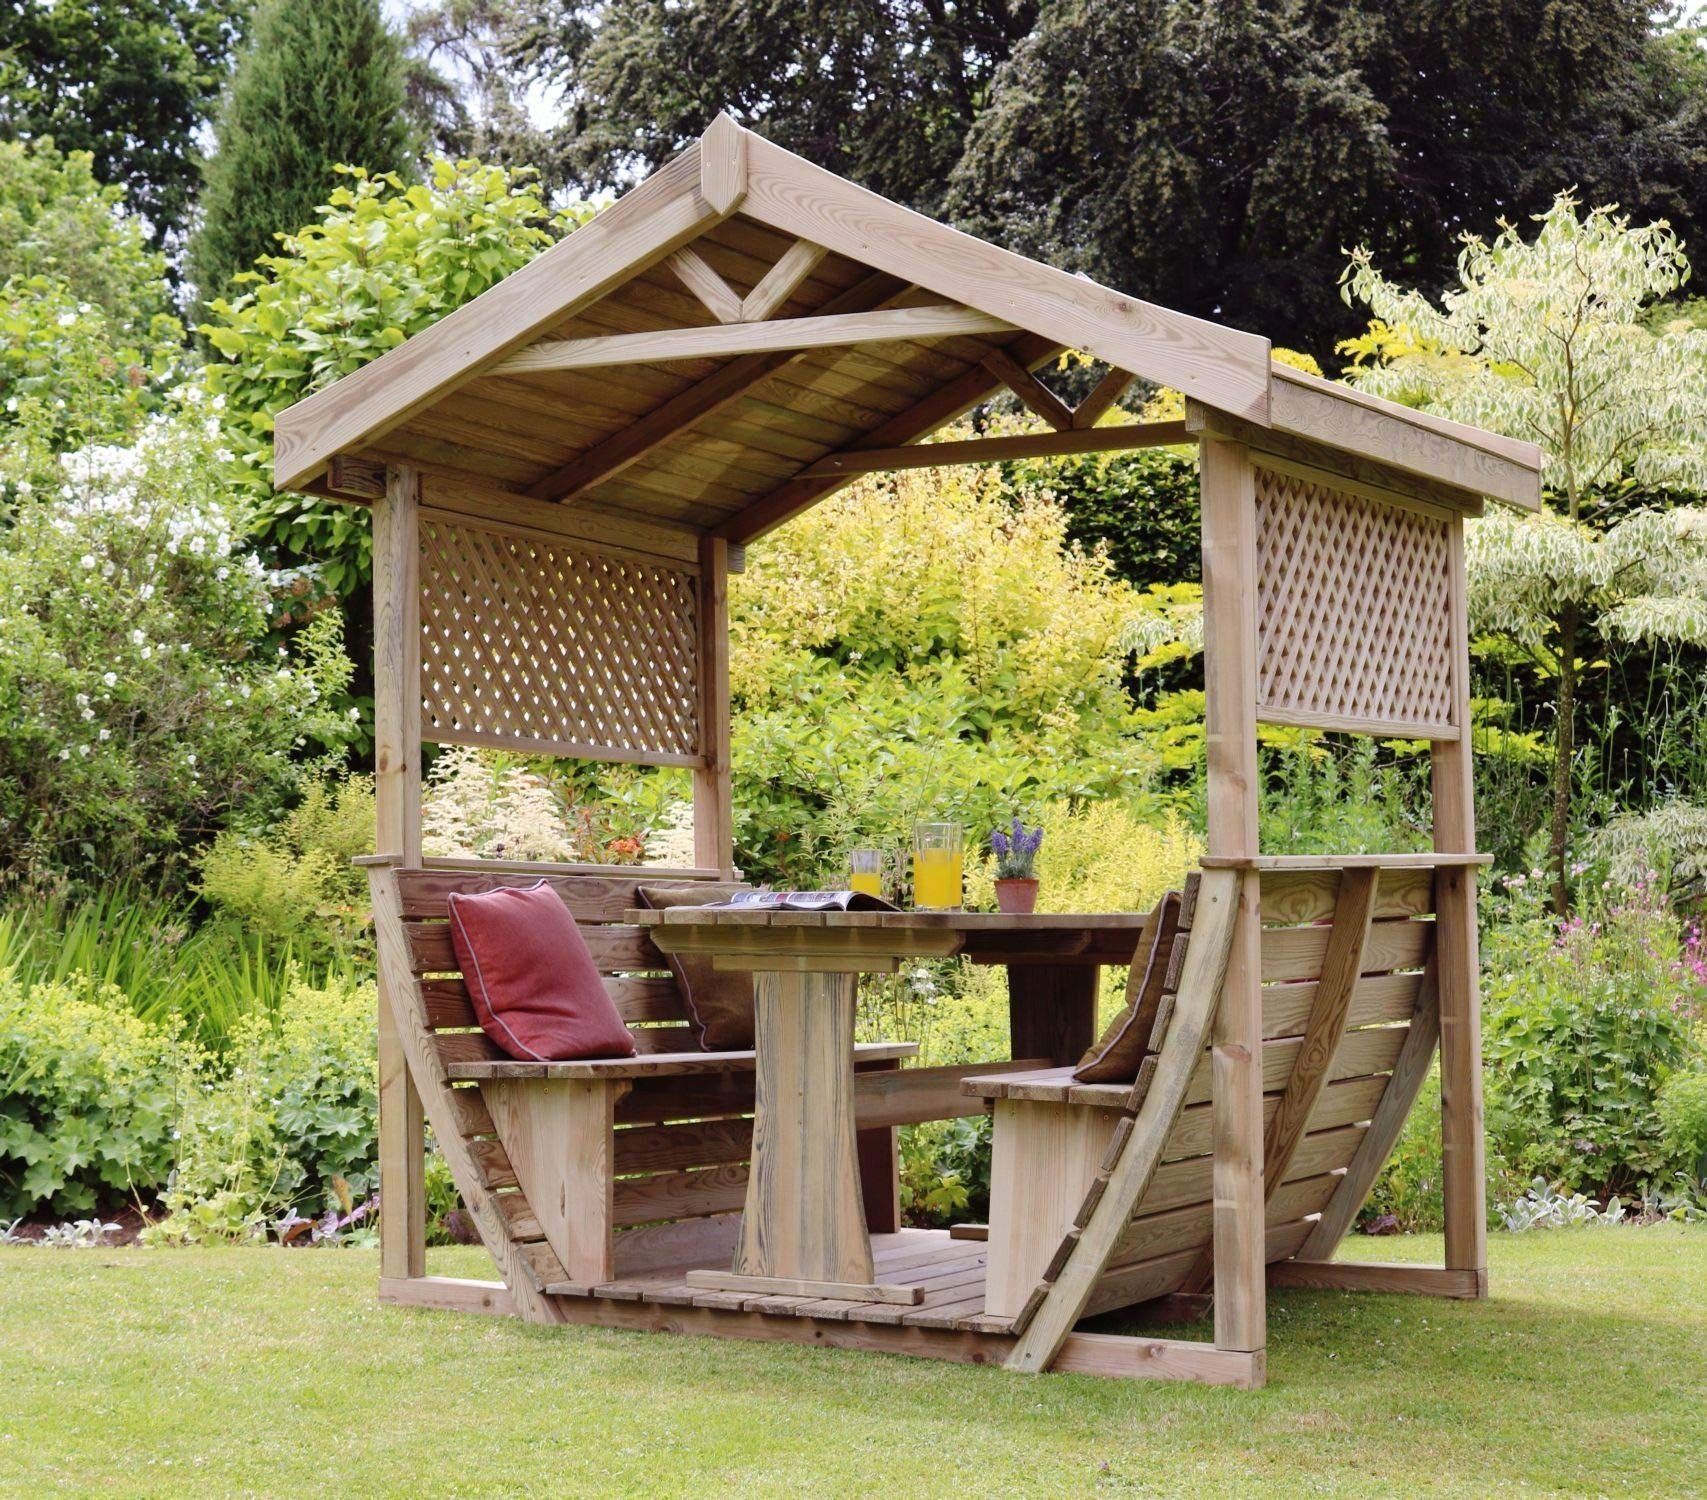 Wooden Garden Furniture Corner Arbour Garden Arbour Seat Pergola